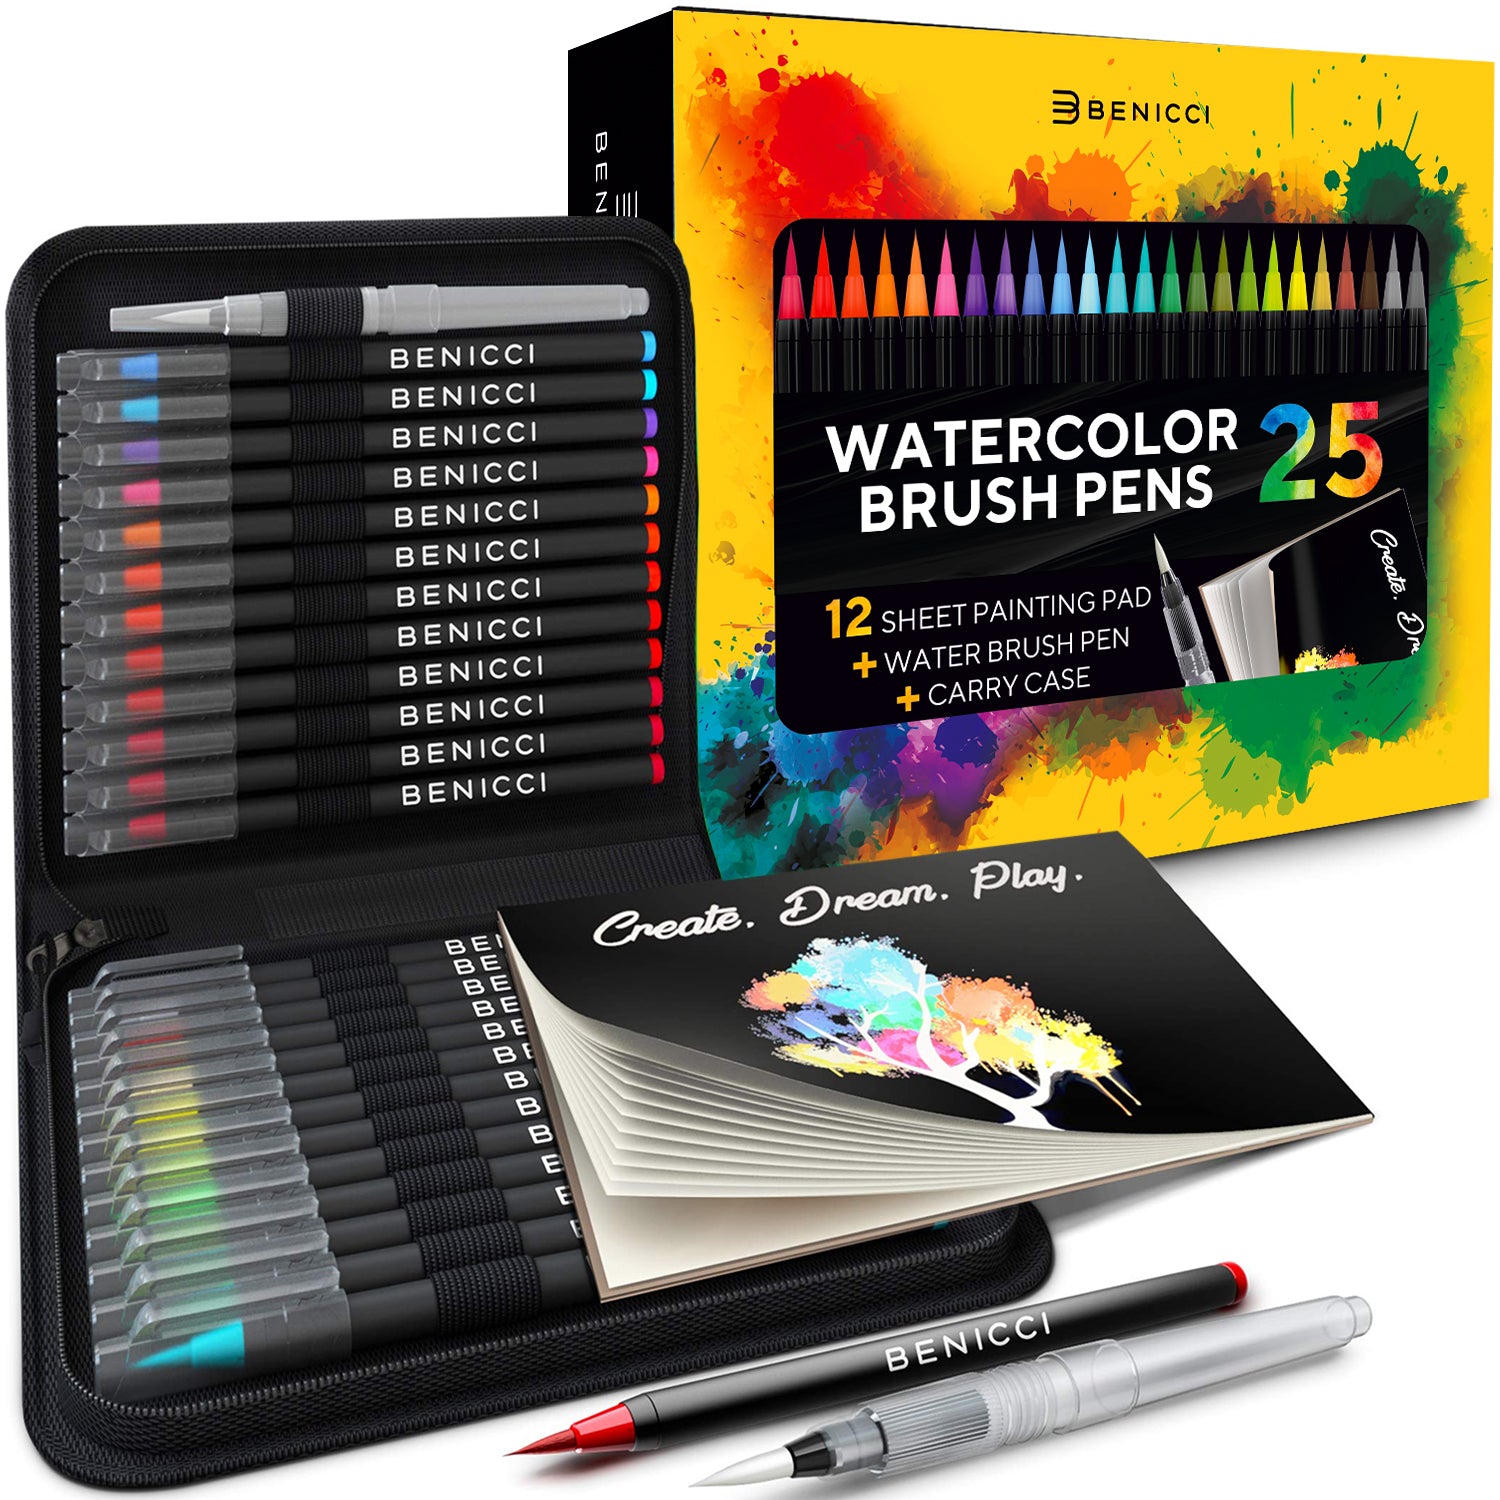 Prediken Commandant jas Watercolor Brush Pen Set of 25🌈Amazing Colors — Paint Pens with Pad and  Carry Case - Benicci